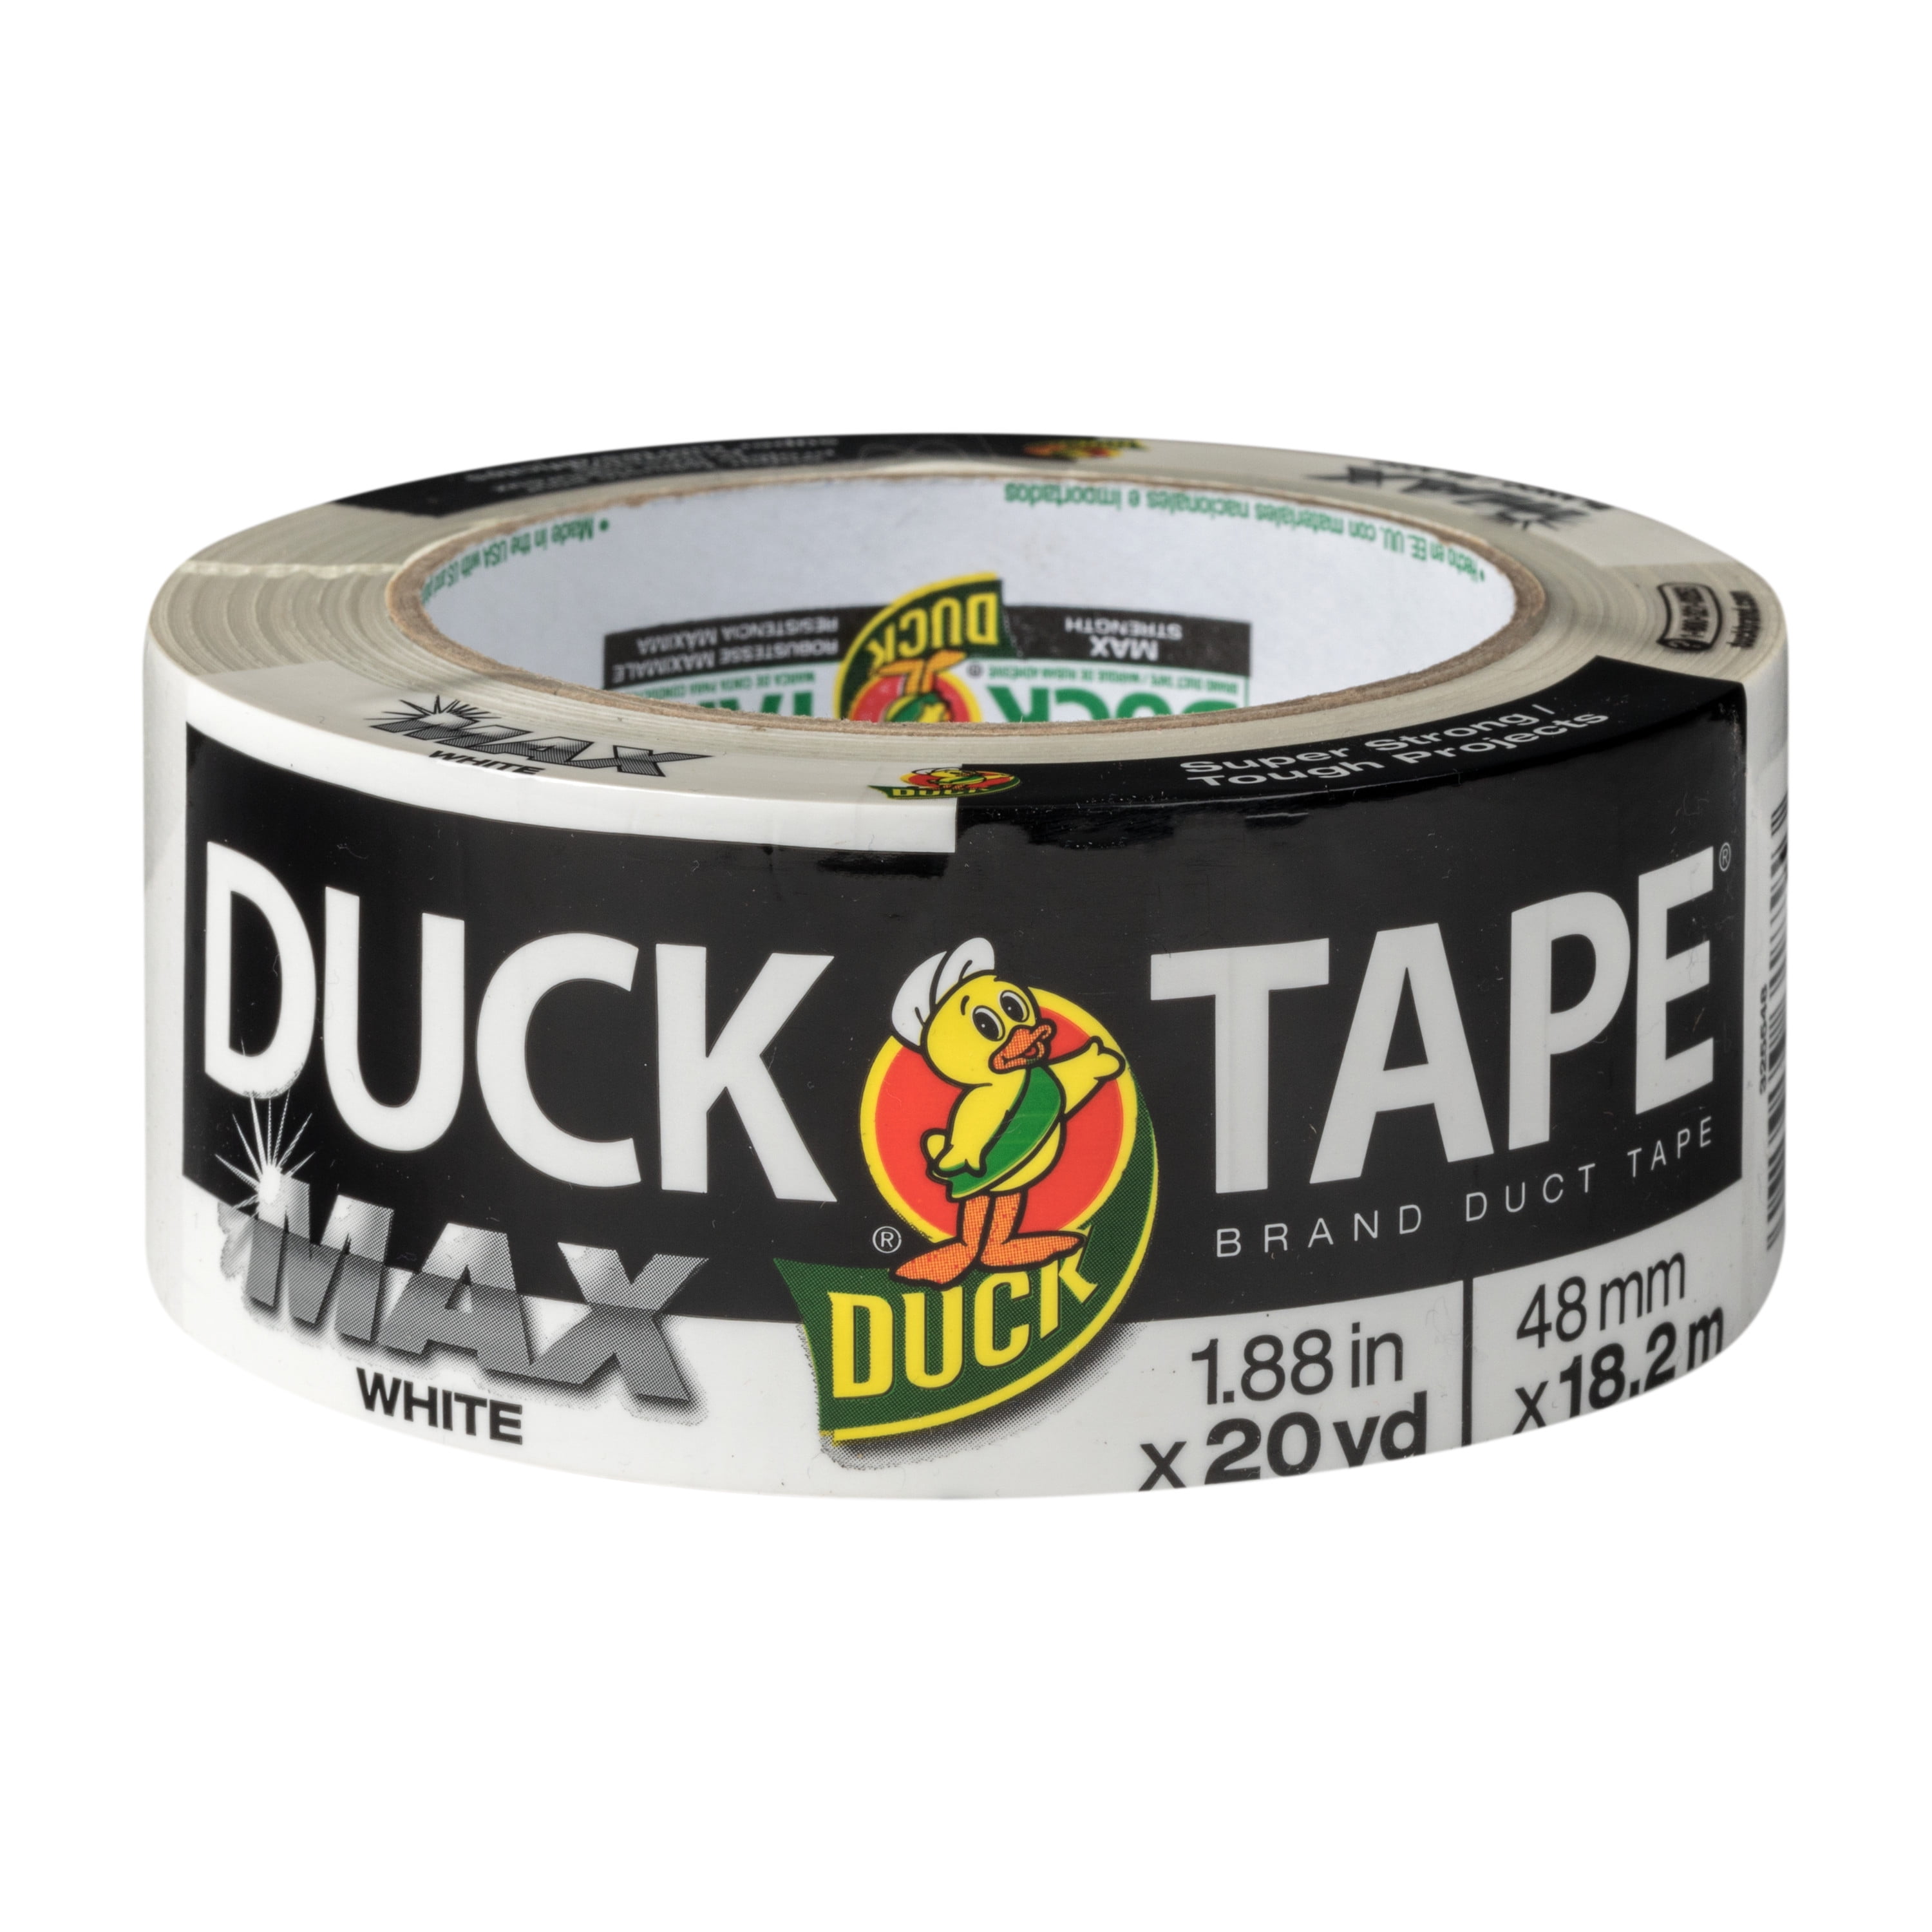 L White  Duct Tape W x 20 yd Duck  1.88 in 